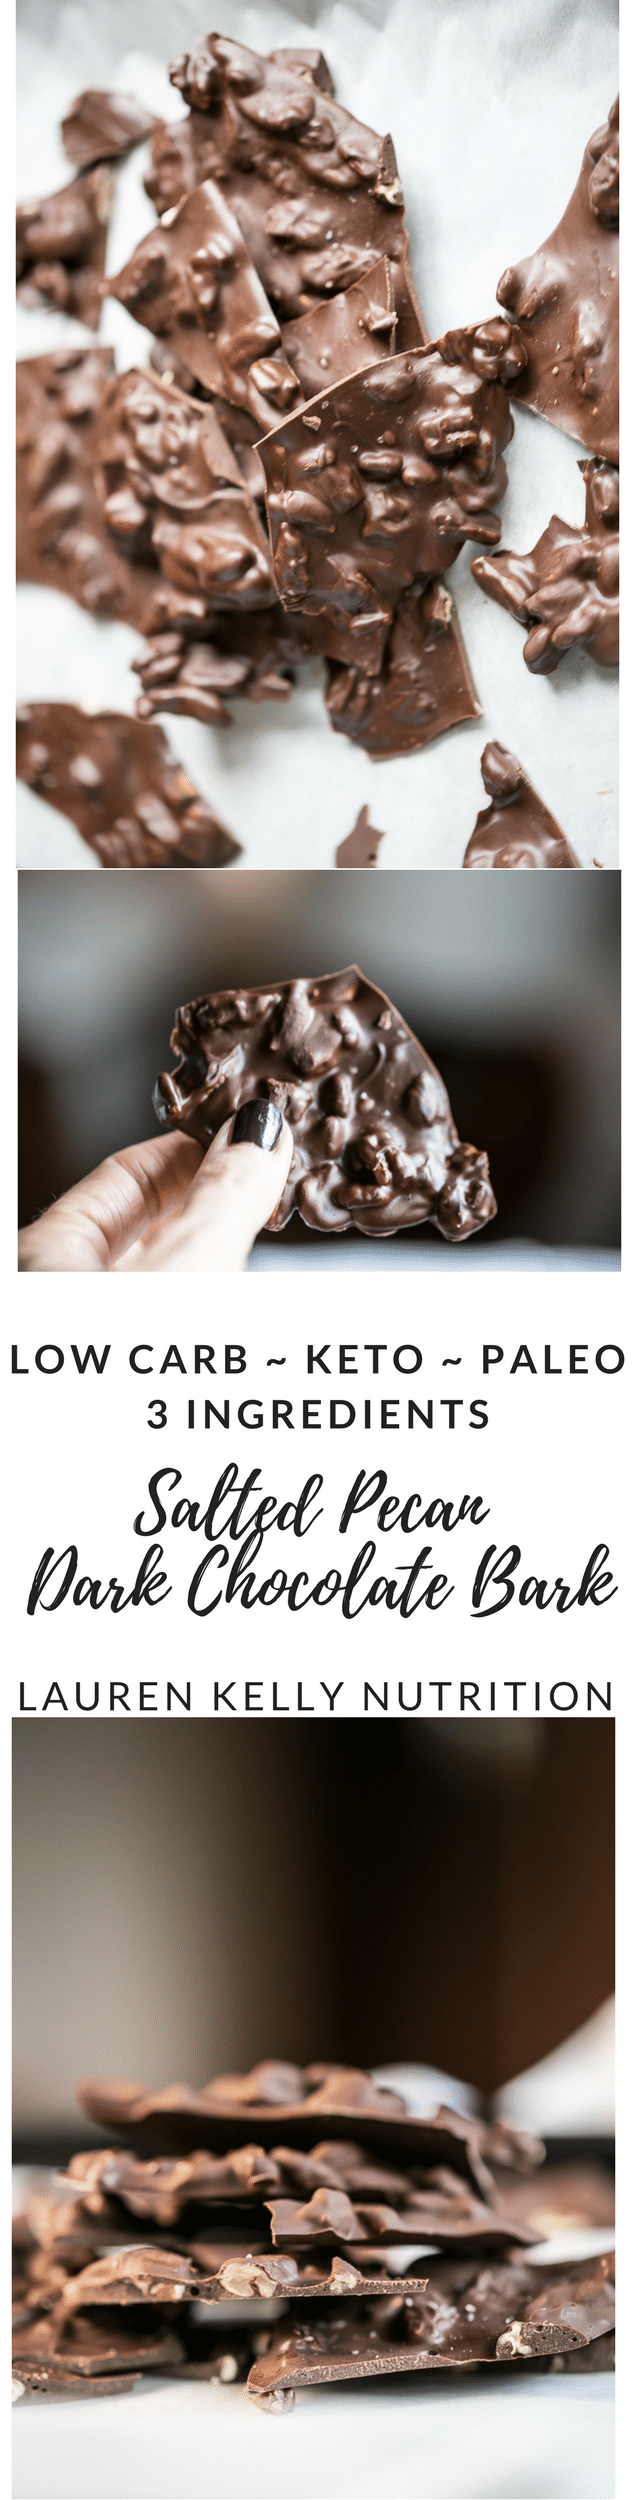 Low Carb, Keto, Paleo Salted Pecan Dark Chocolate Bark from Lauren Kelly Nutrition